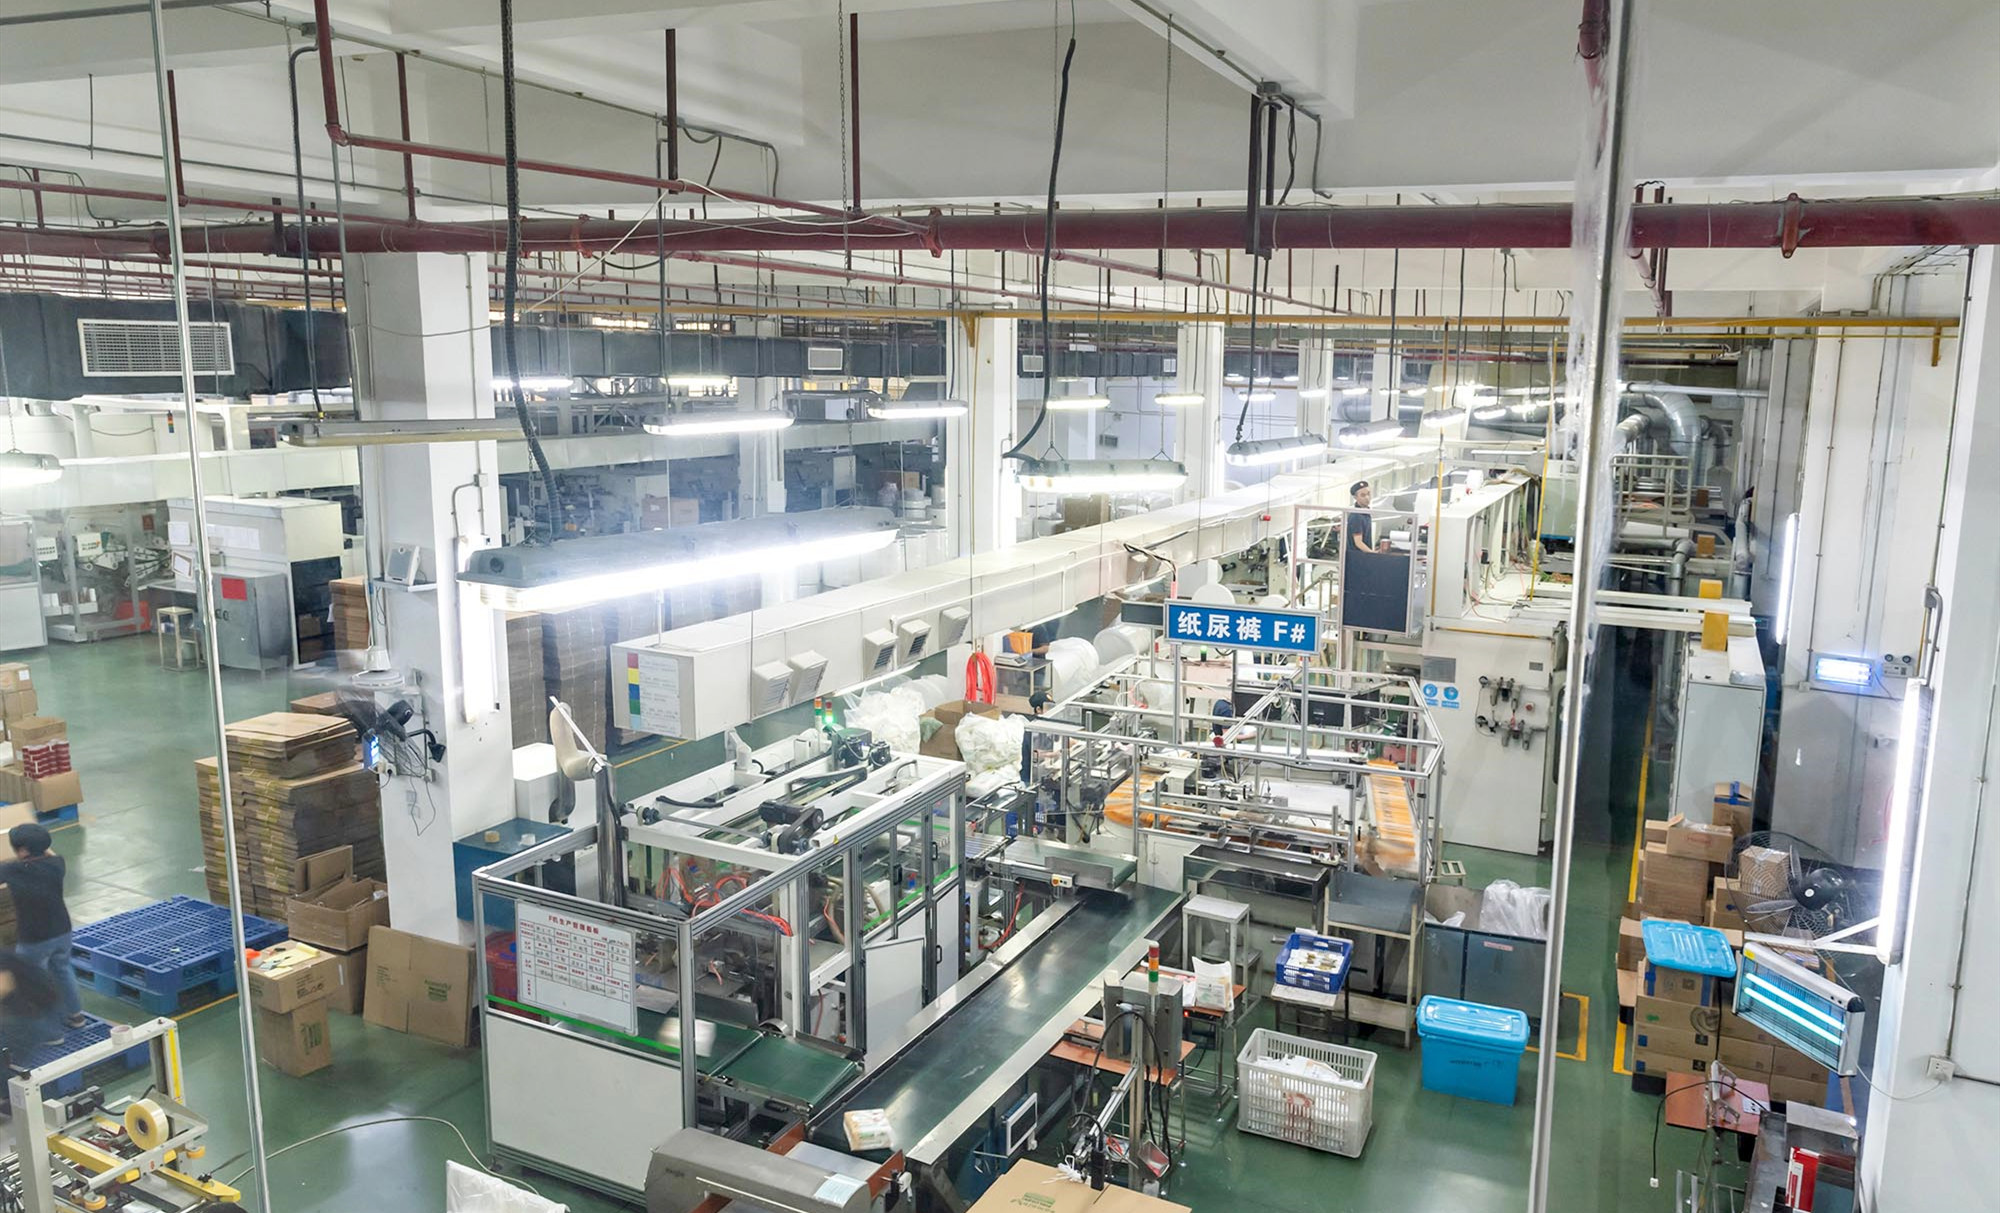 Baron Dust-free Production Environment | Machine Shop